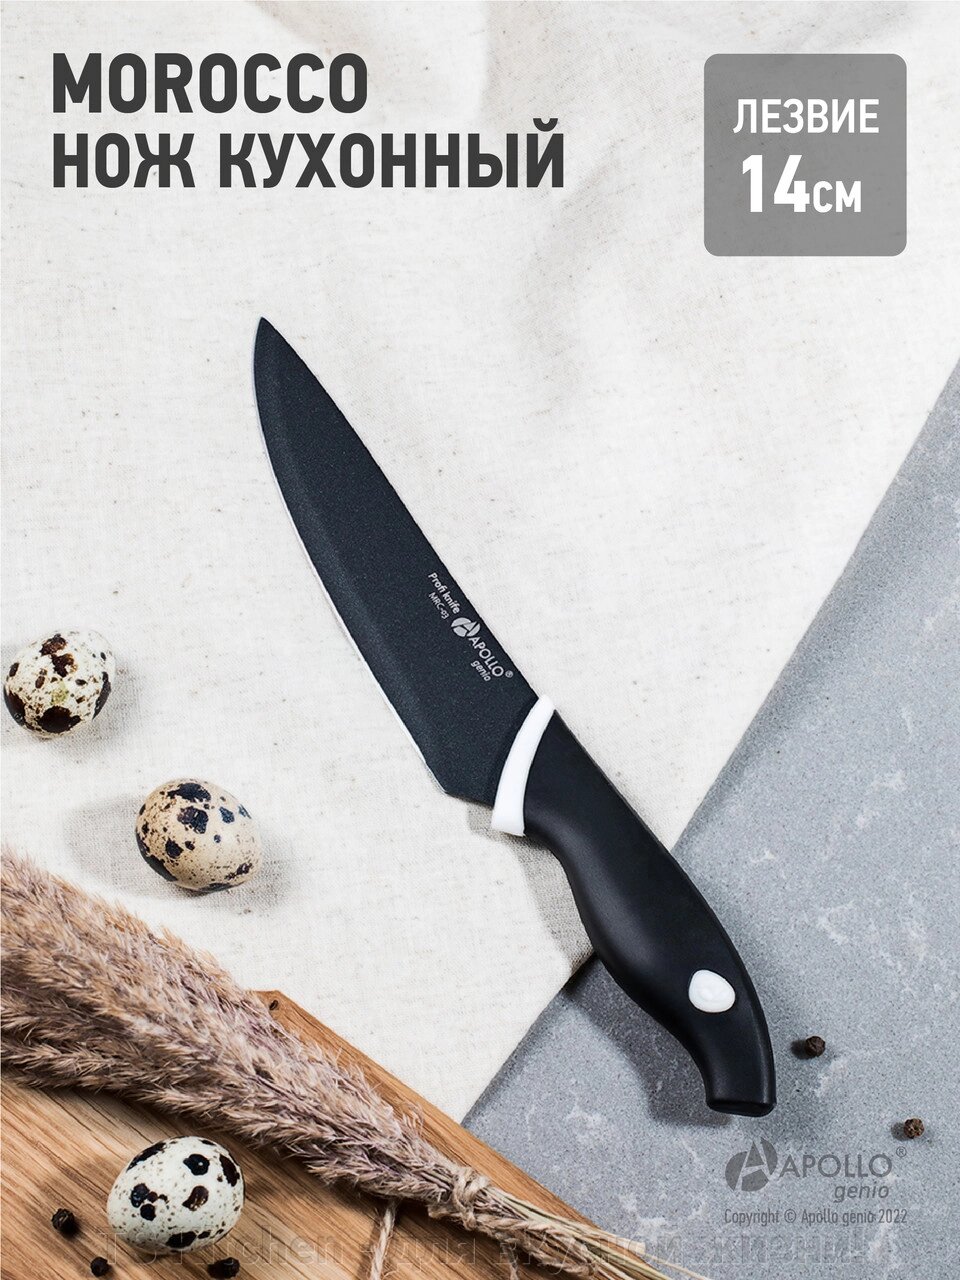 Нож кухонный  Genio "Morocco" MRC-03/APOLLO от компании TS Kitchen - для вкусной жизни! - фото 1